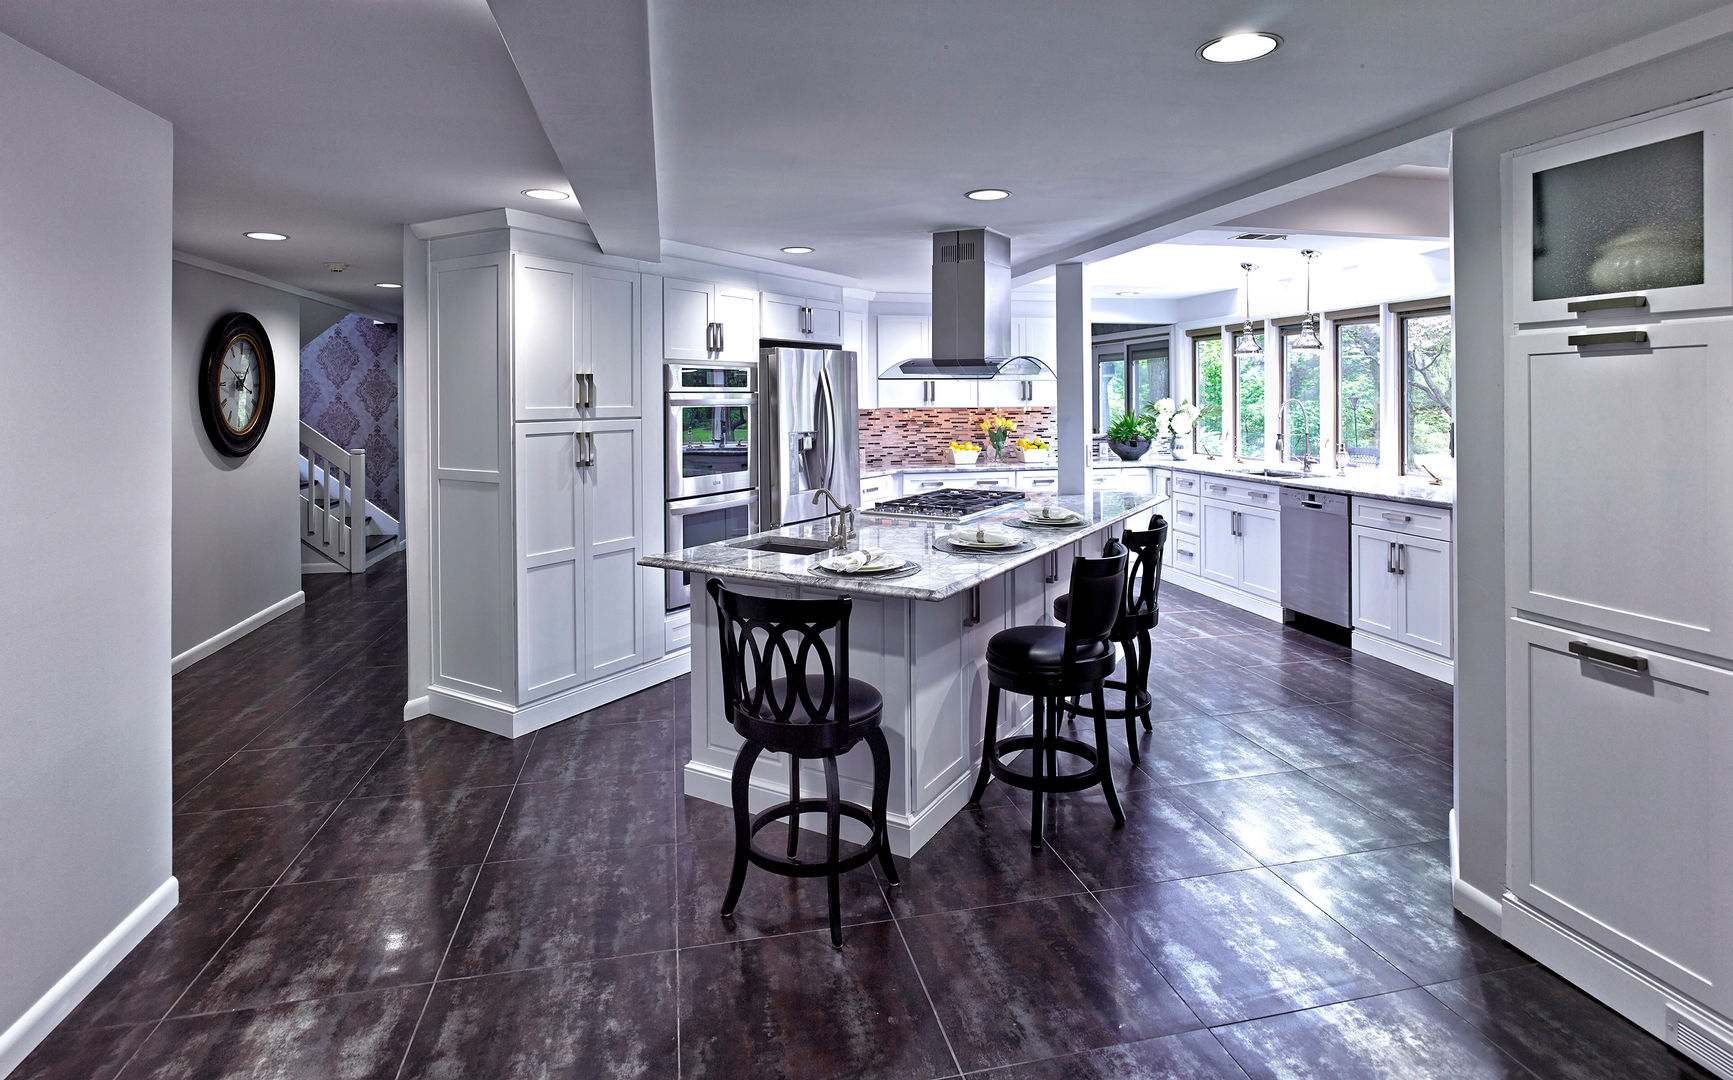 2014 Coty Award Wining Kitchen Main Line Kitchen Design Classic style kitchen